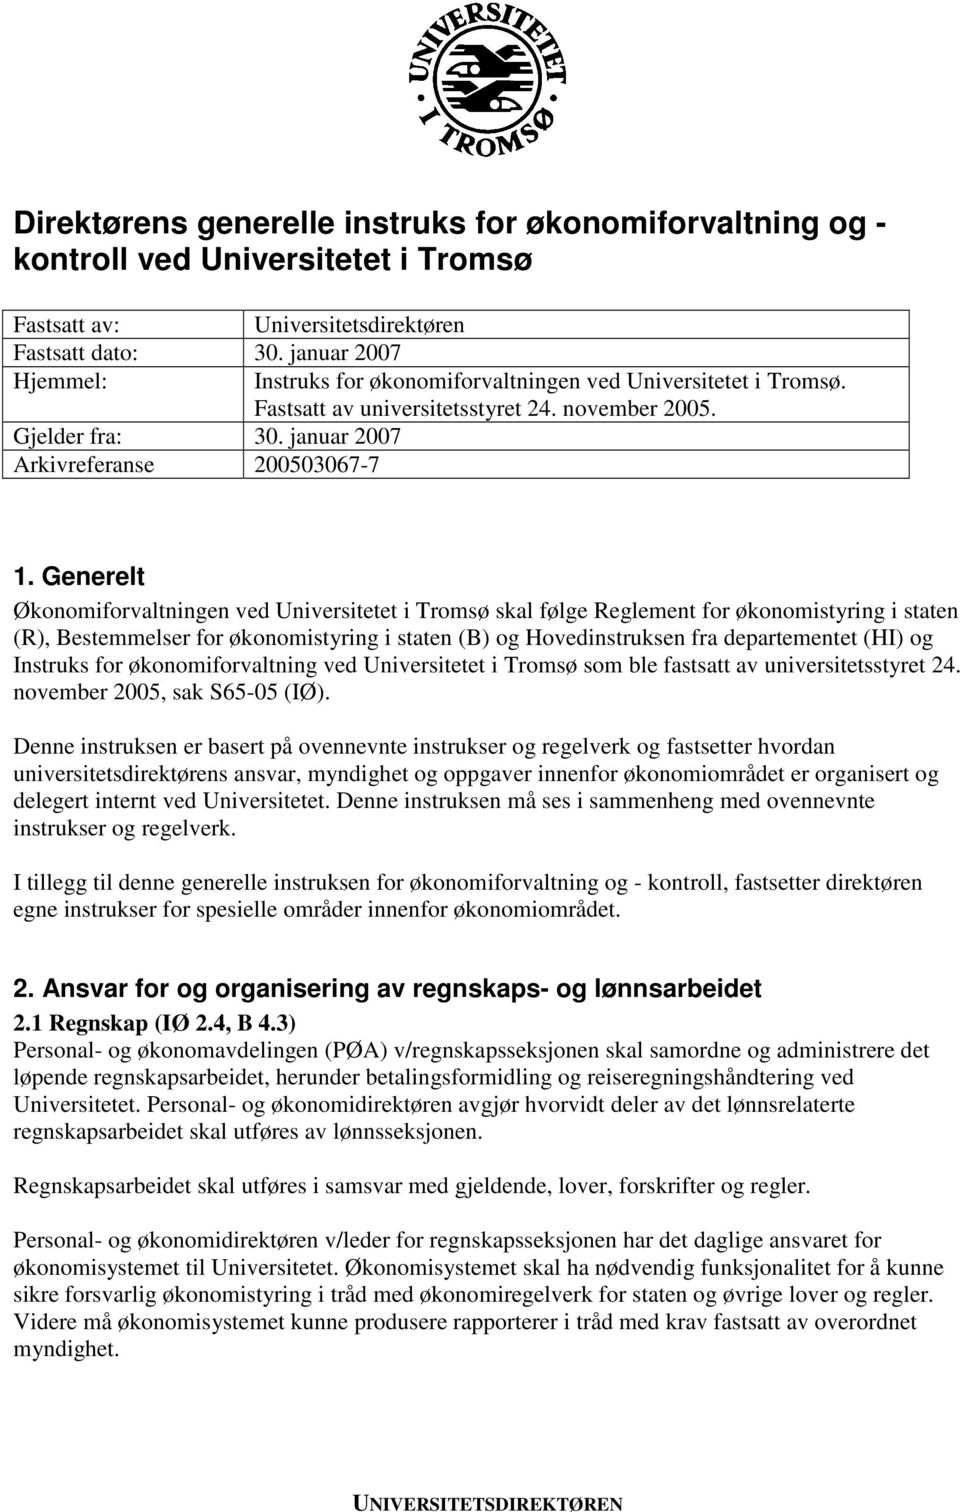 Generelt Økonomiforvaltningen ved Universitetet i Tromsø skal følge Reglement for økonomistyring i staten (R), Bestemmelser for økonomistyring i staten (B) og Hovedinstruksen fra departementet (HI)